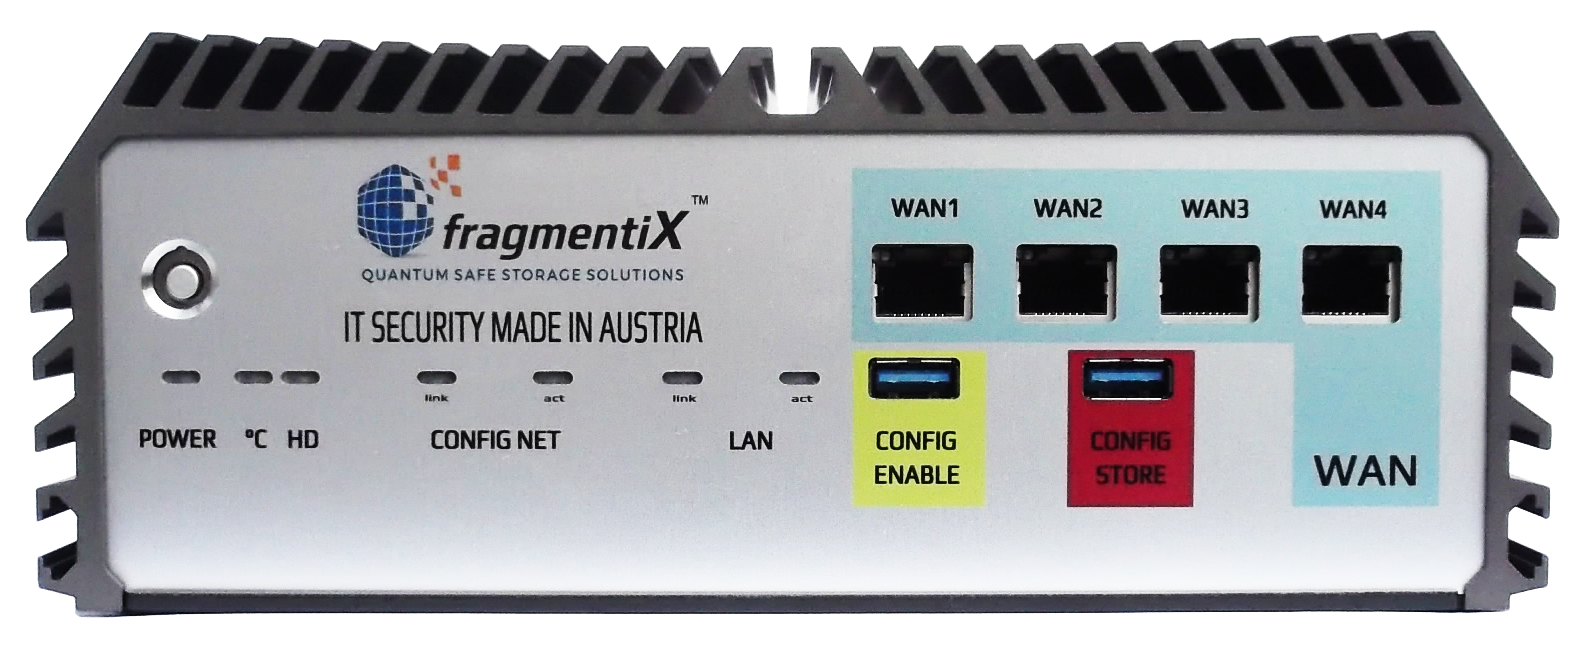 fragmentiX box front